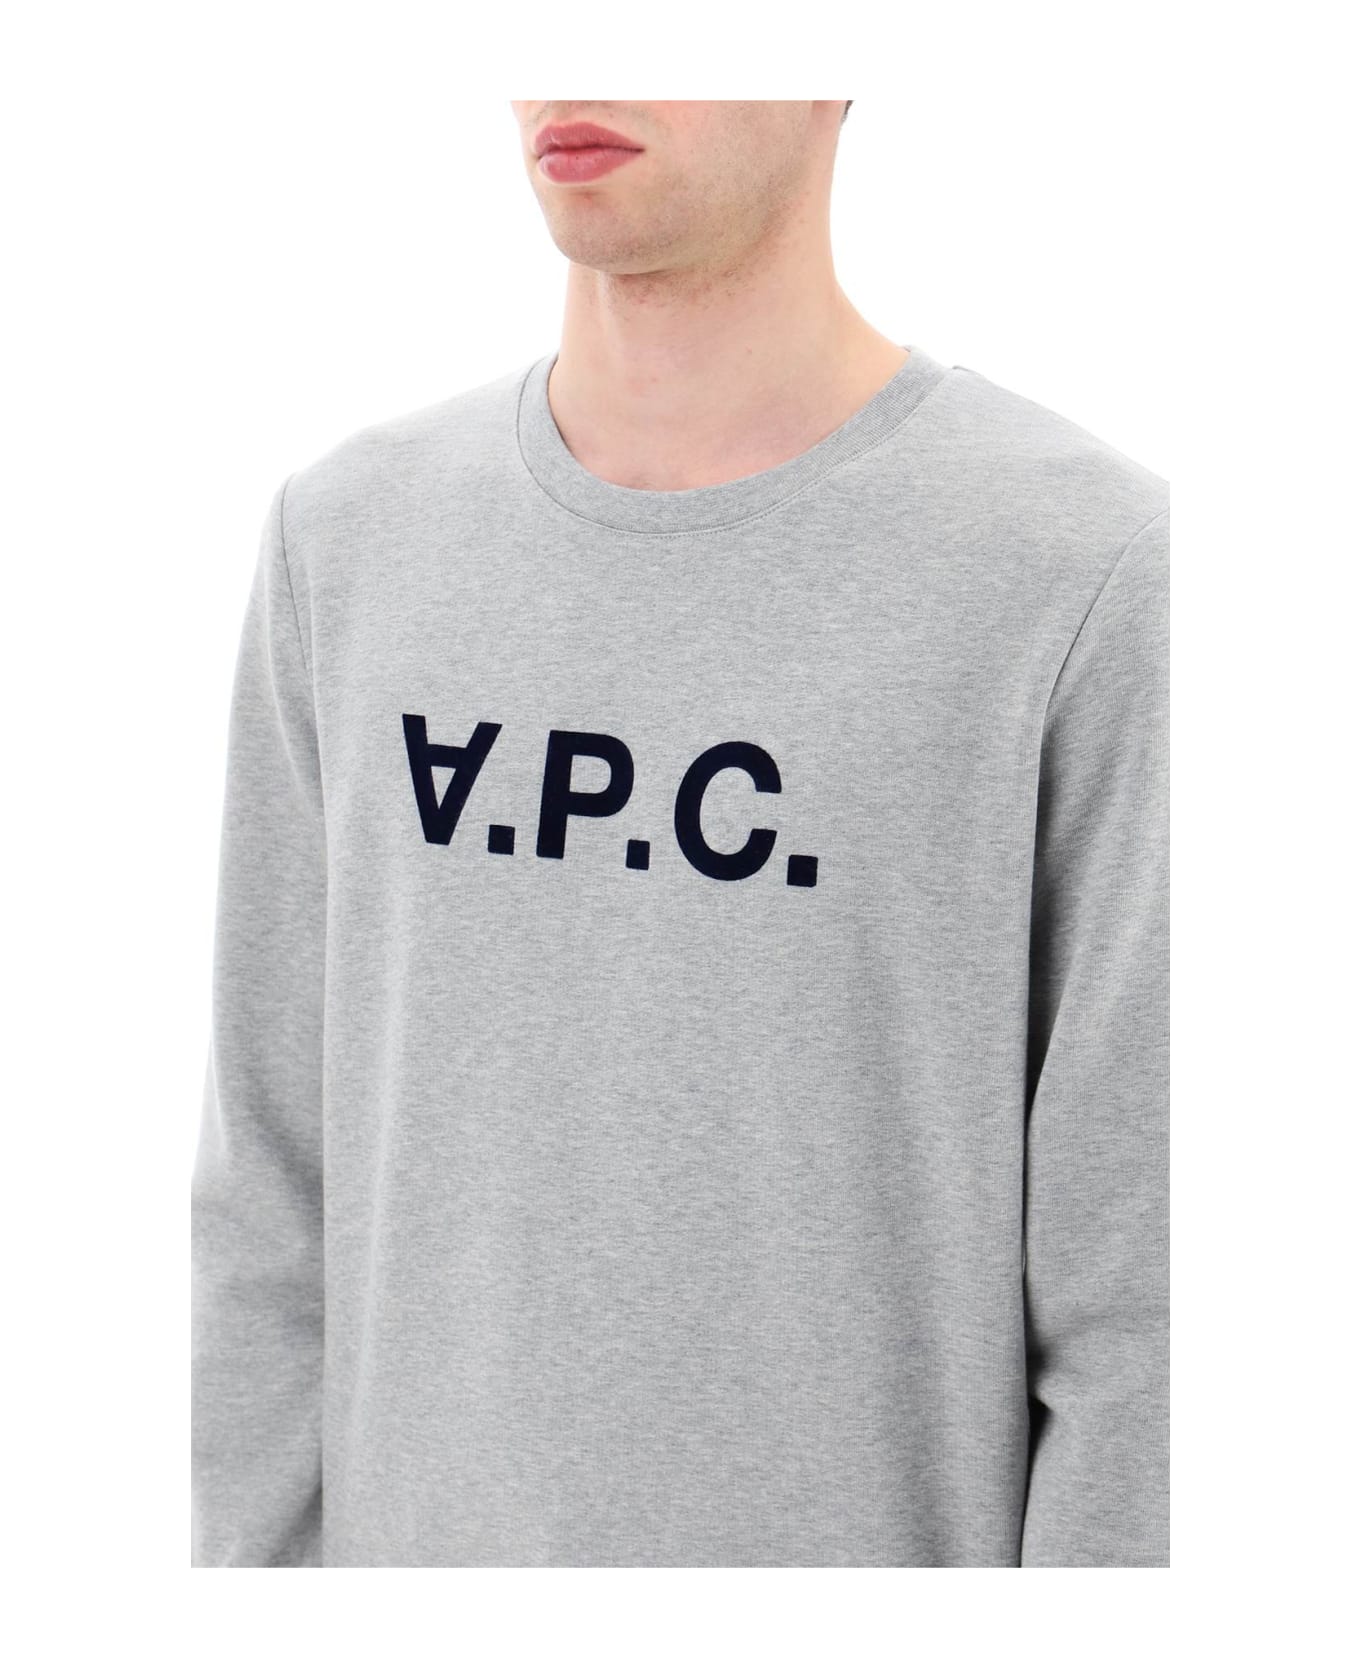 A.P.C. Cotton Sweatshirt With Logo - Heather grey フリース